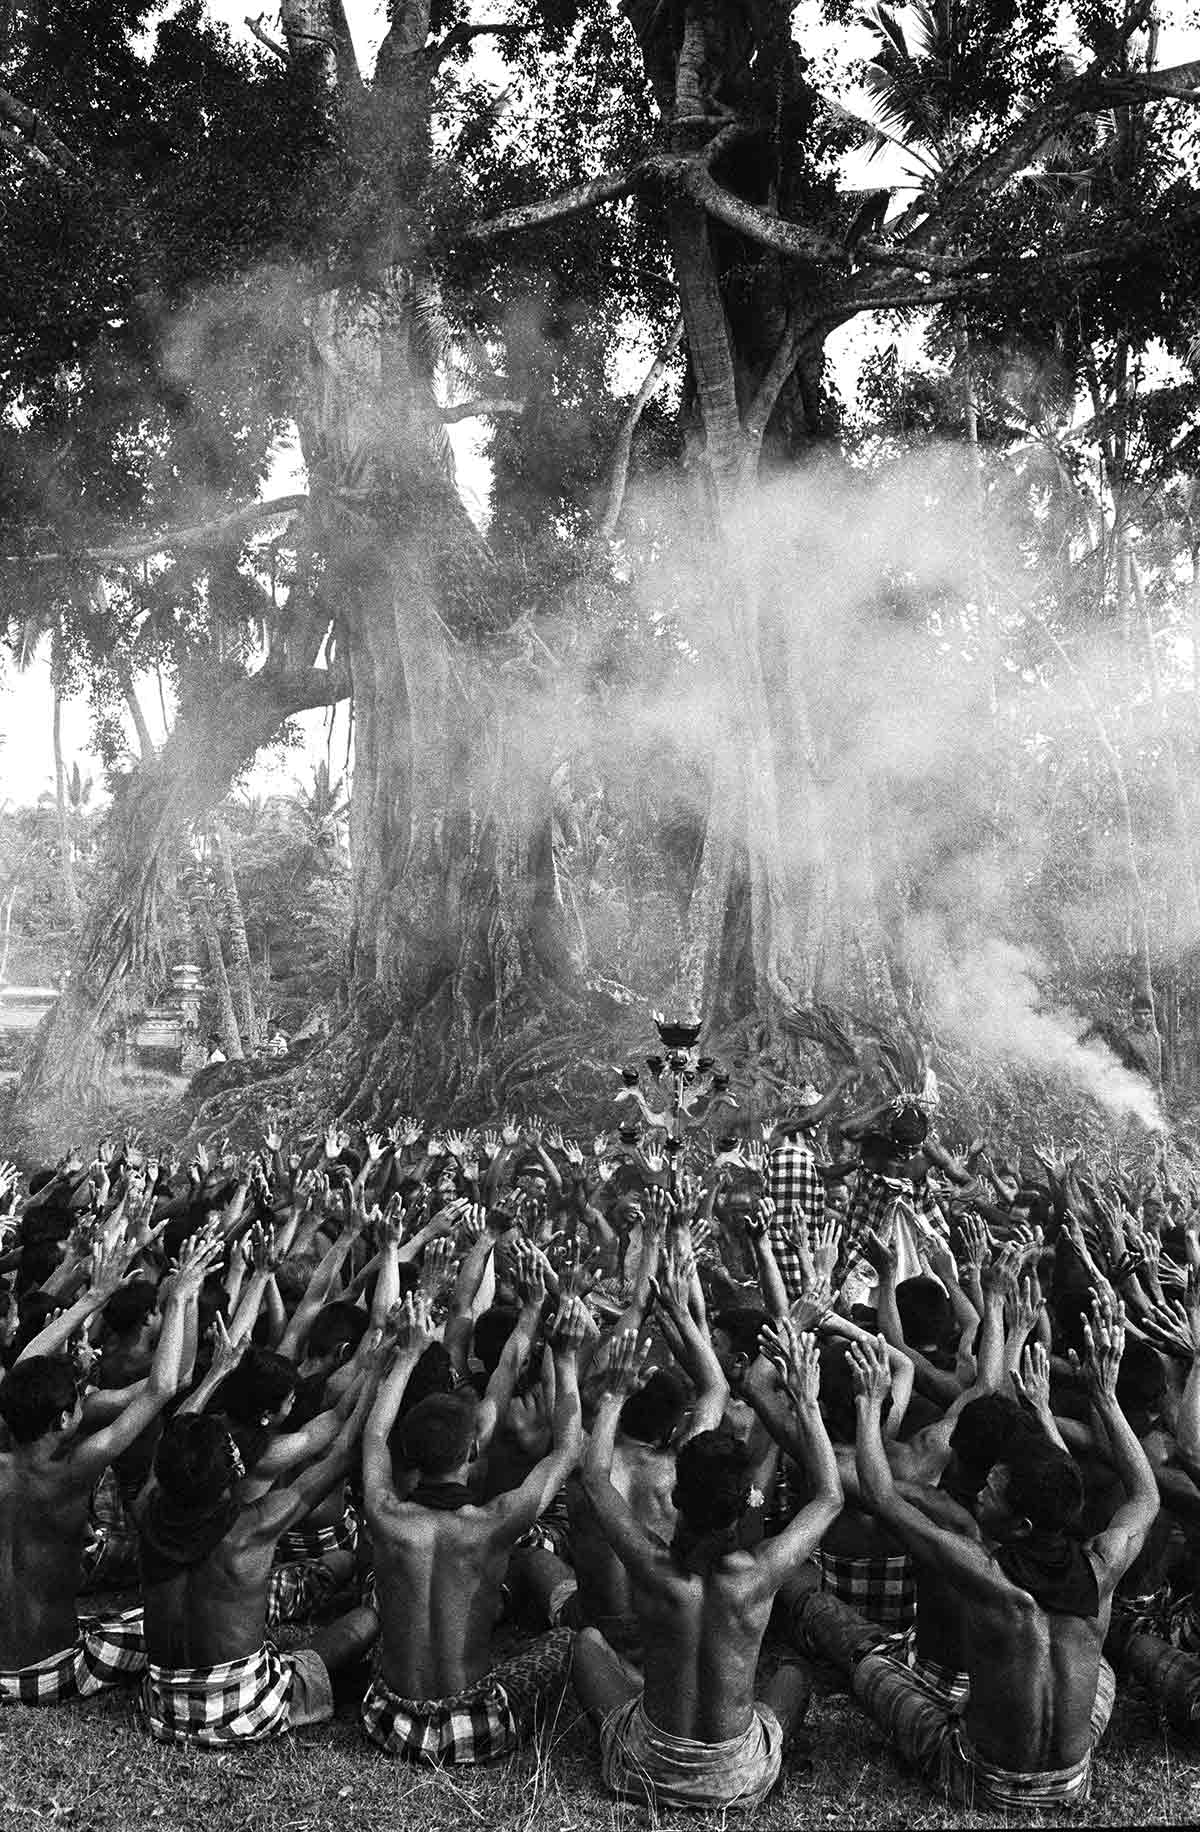 photo basel 2023
Thomas Hoepkers, Tänzer beim Ketjak-Tanz, Ubud, Bali, Indonesien, 1965